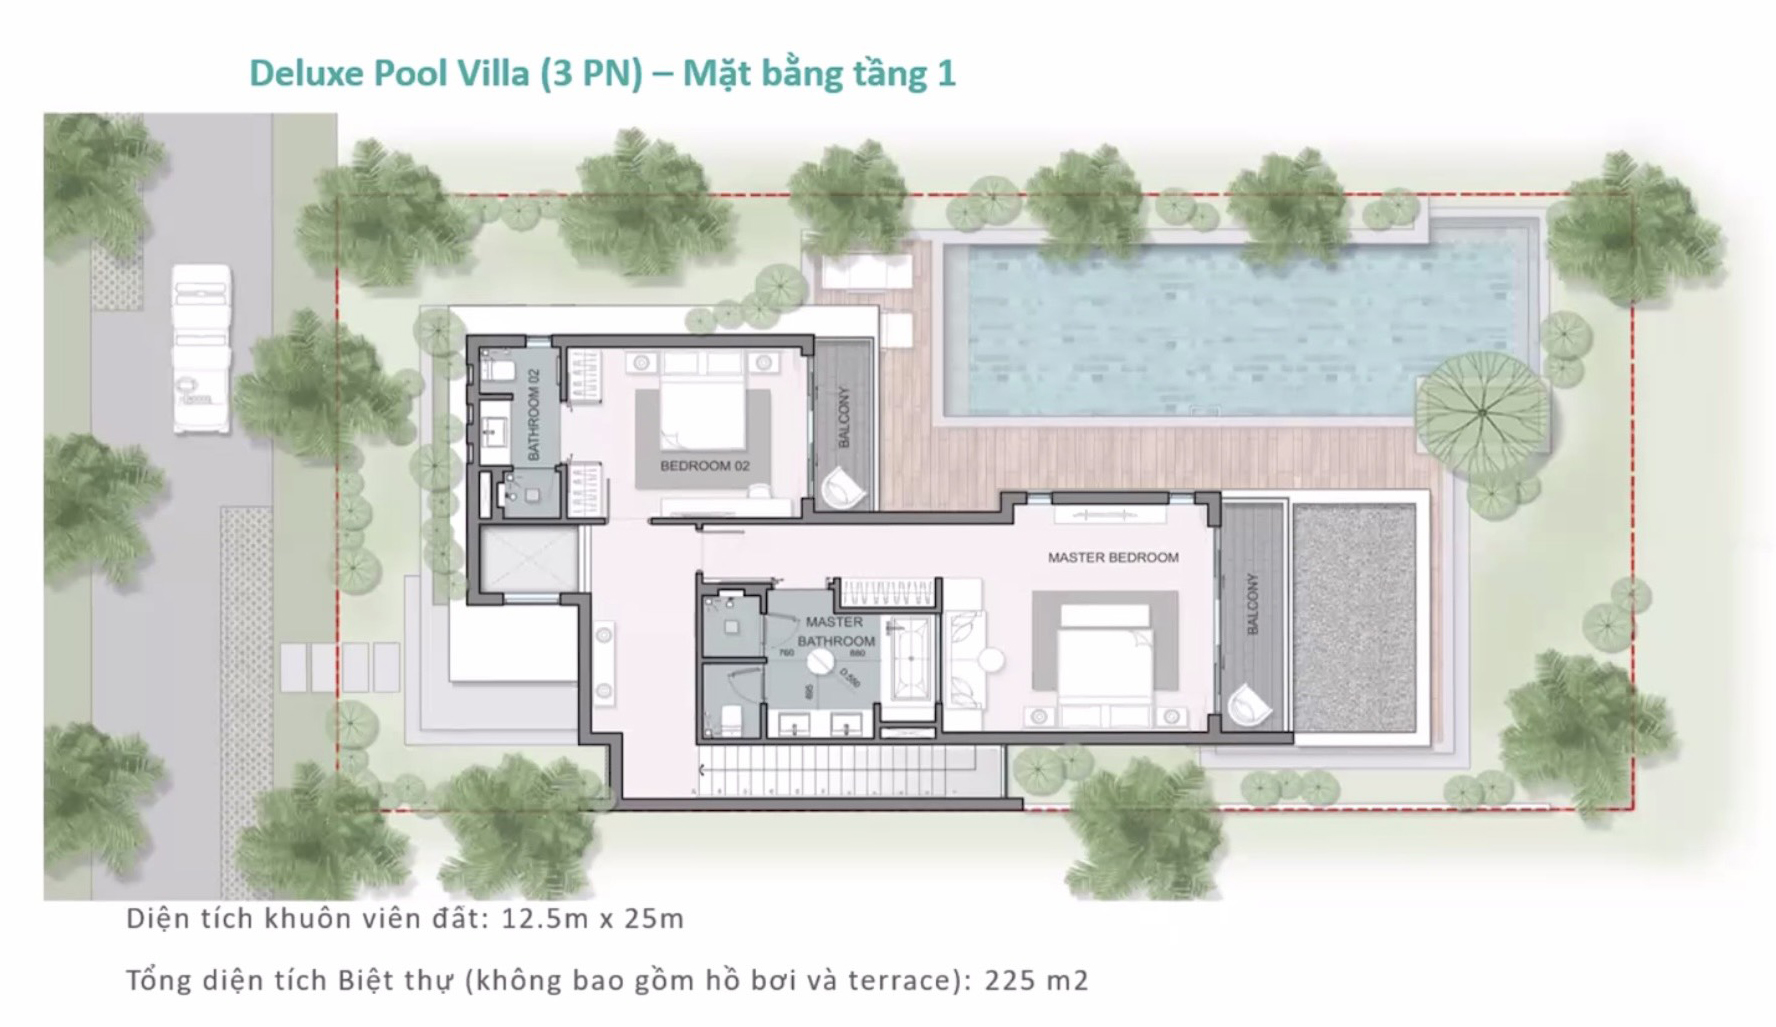 deluxe pool villa 3PN - mat bang tang 1 